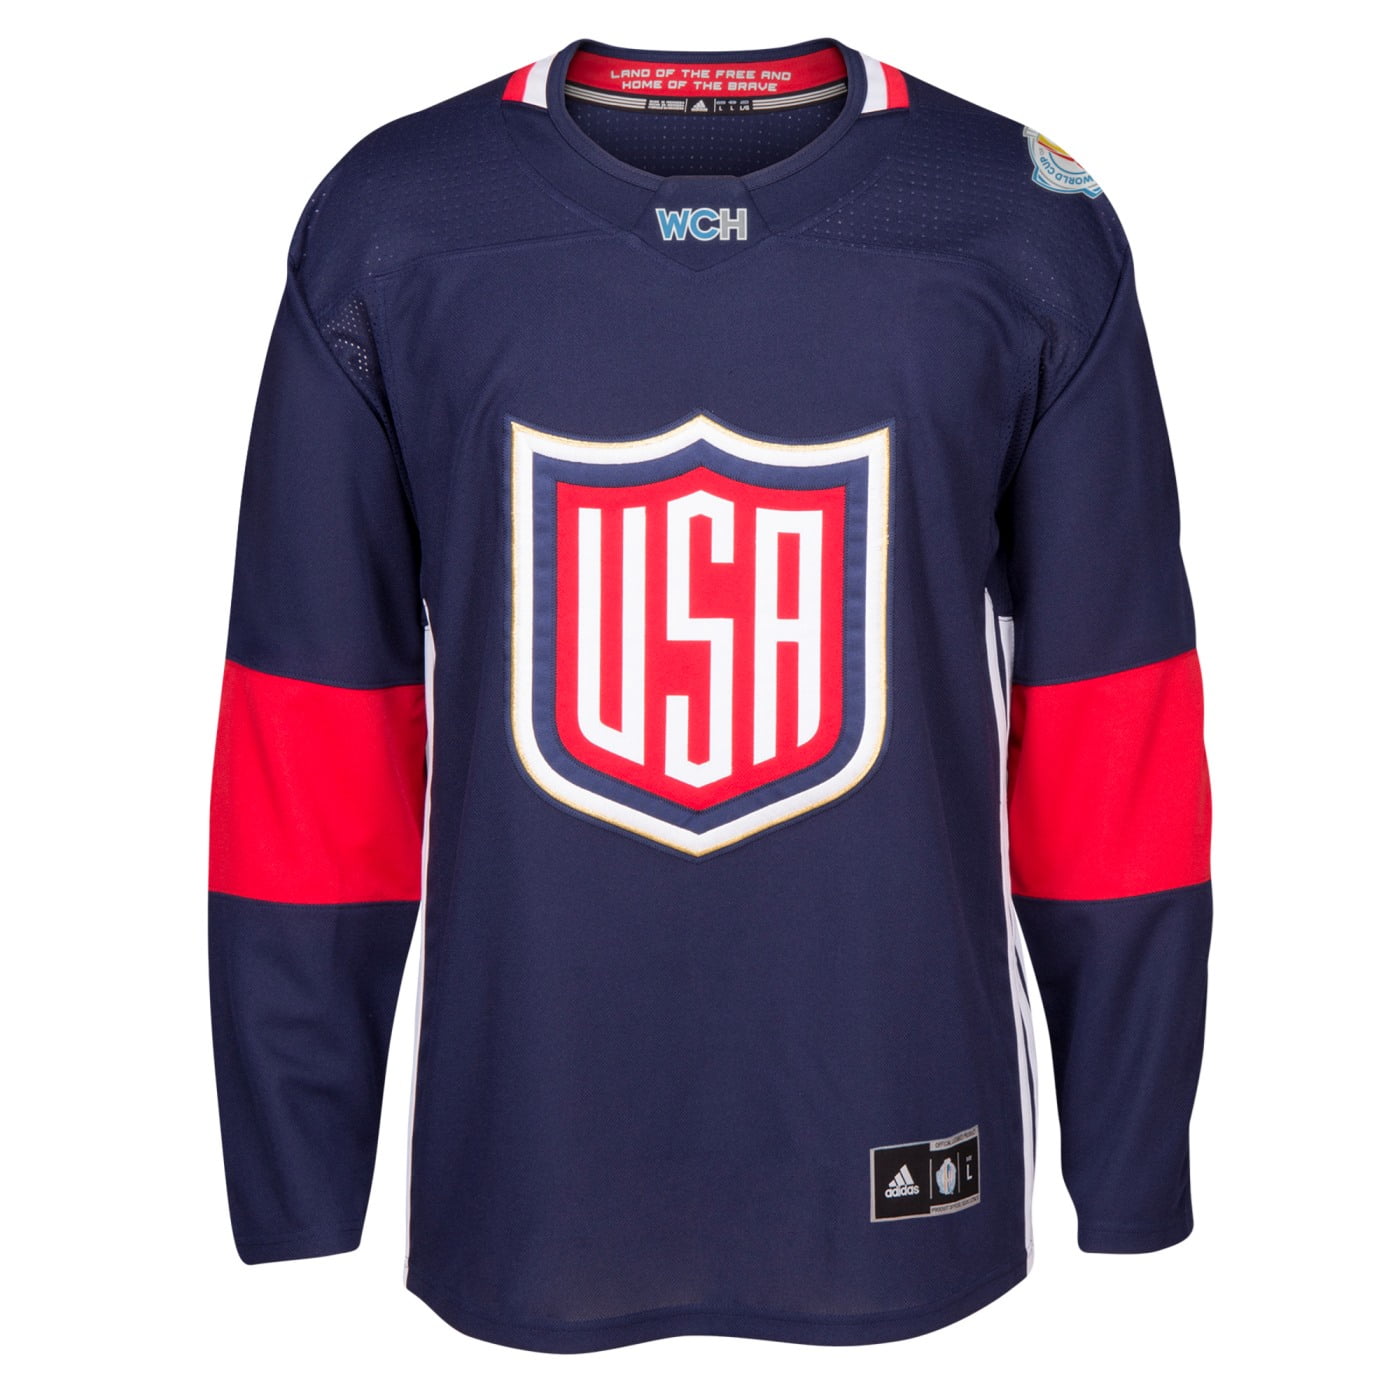 2016 usa hockey jersey